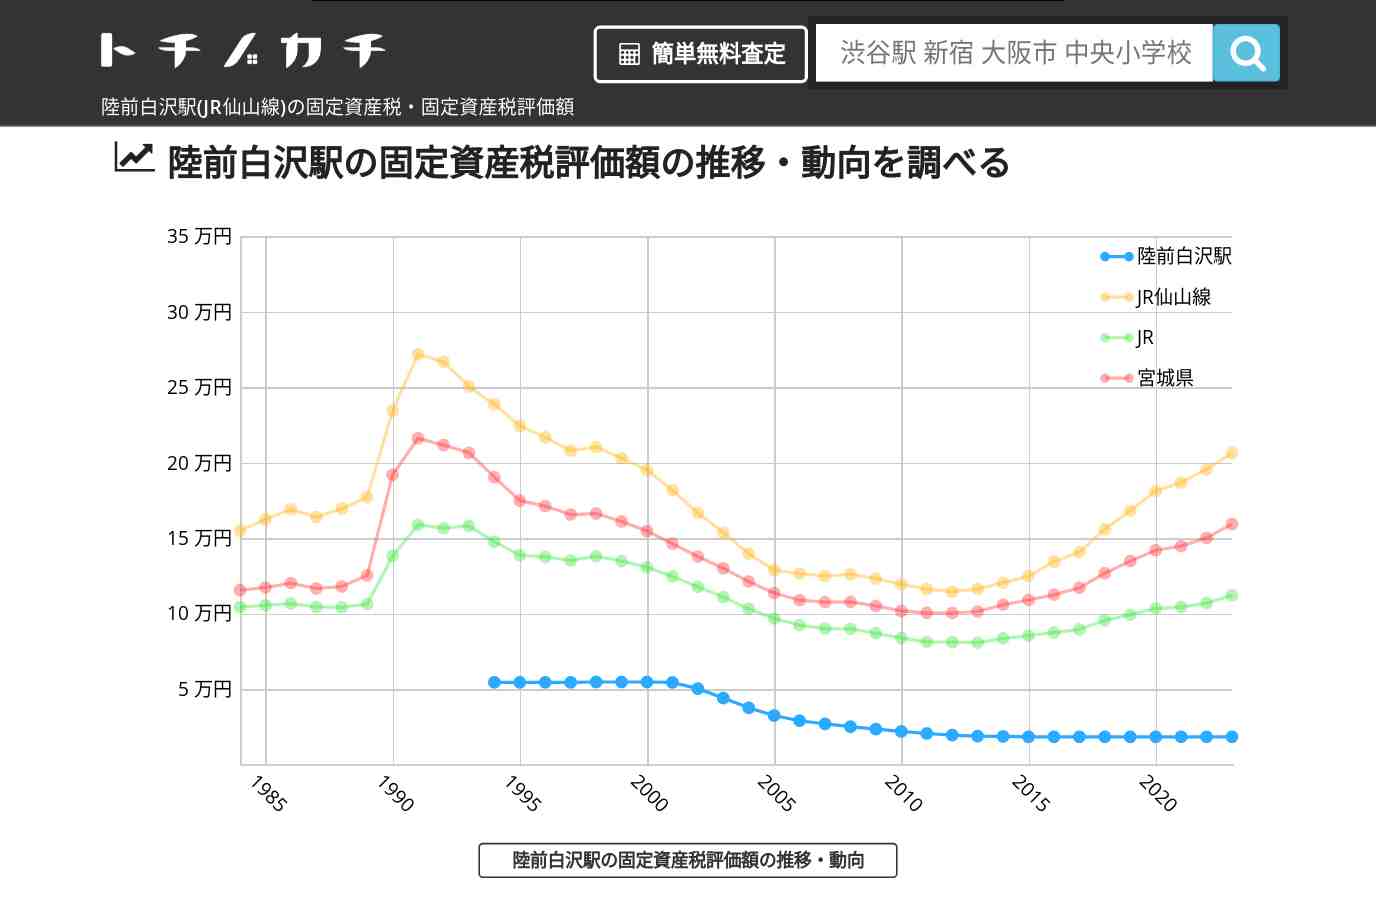 陸前白沢駅(JR仙山線)の固定資産税・固定資産税評価額 | トチノカチ